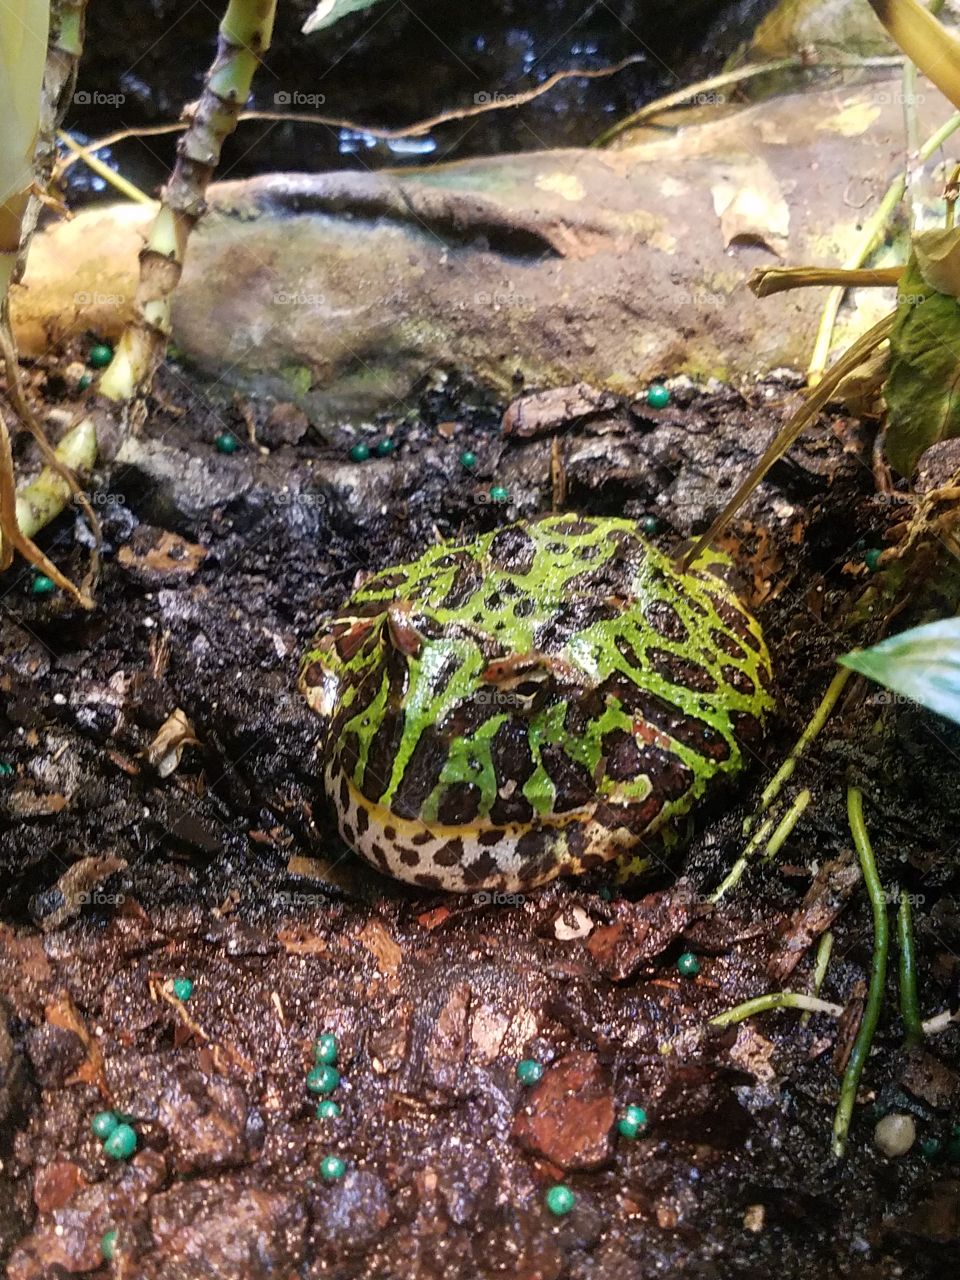 Big frog burrowed down in the mud